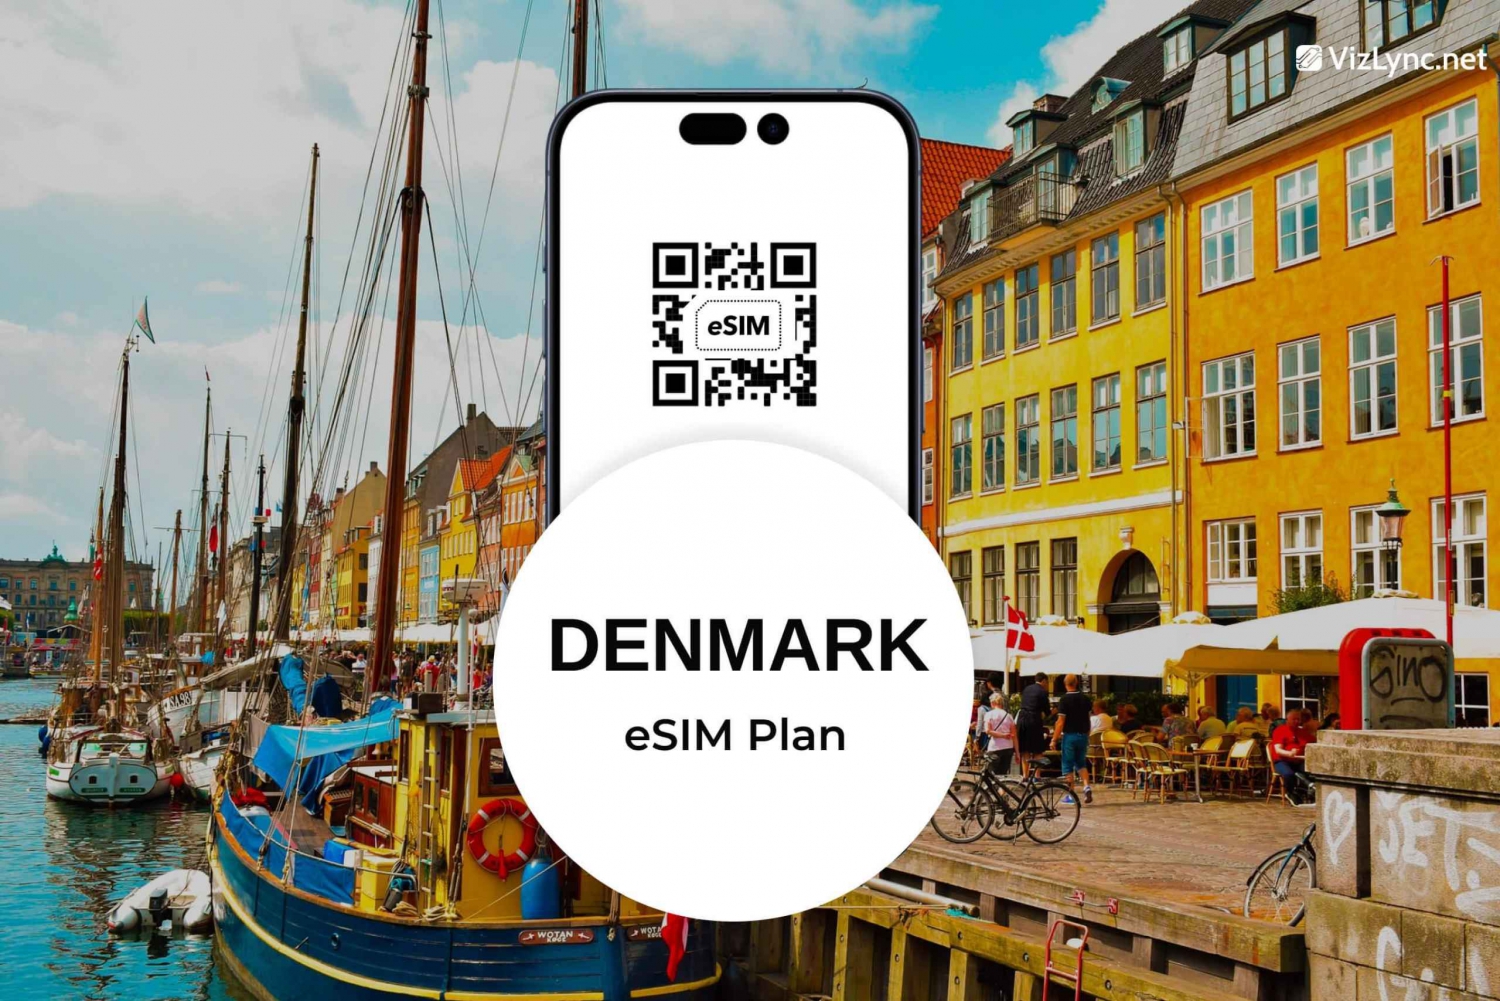 Denmark eSIM Data plans with Super fast Mobile Data Options